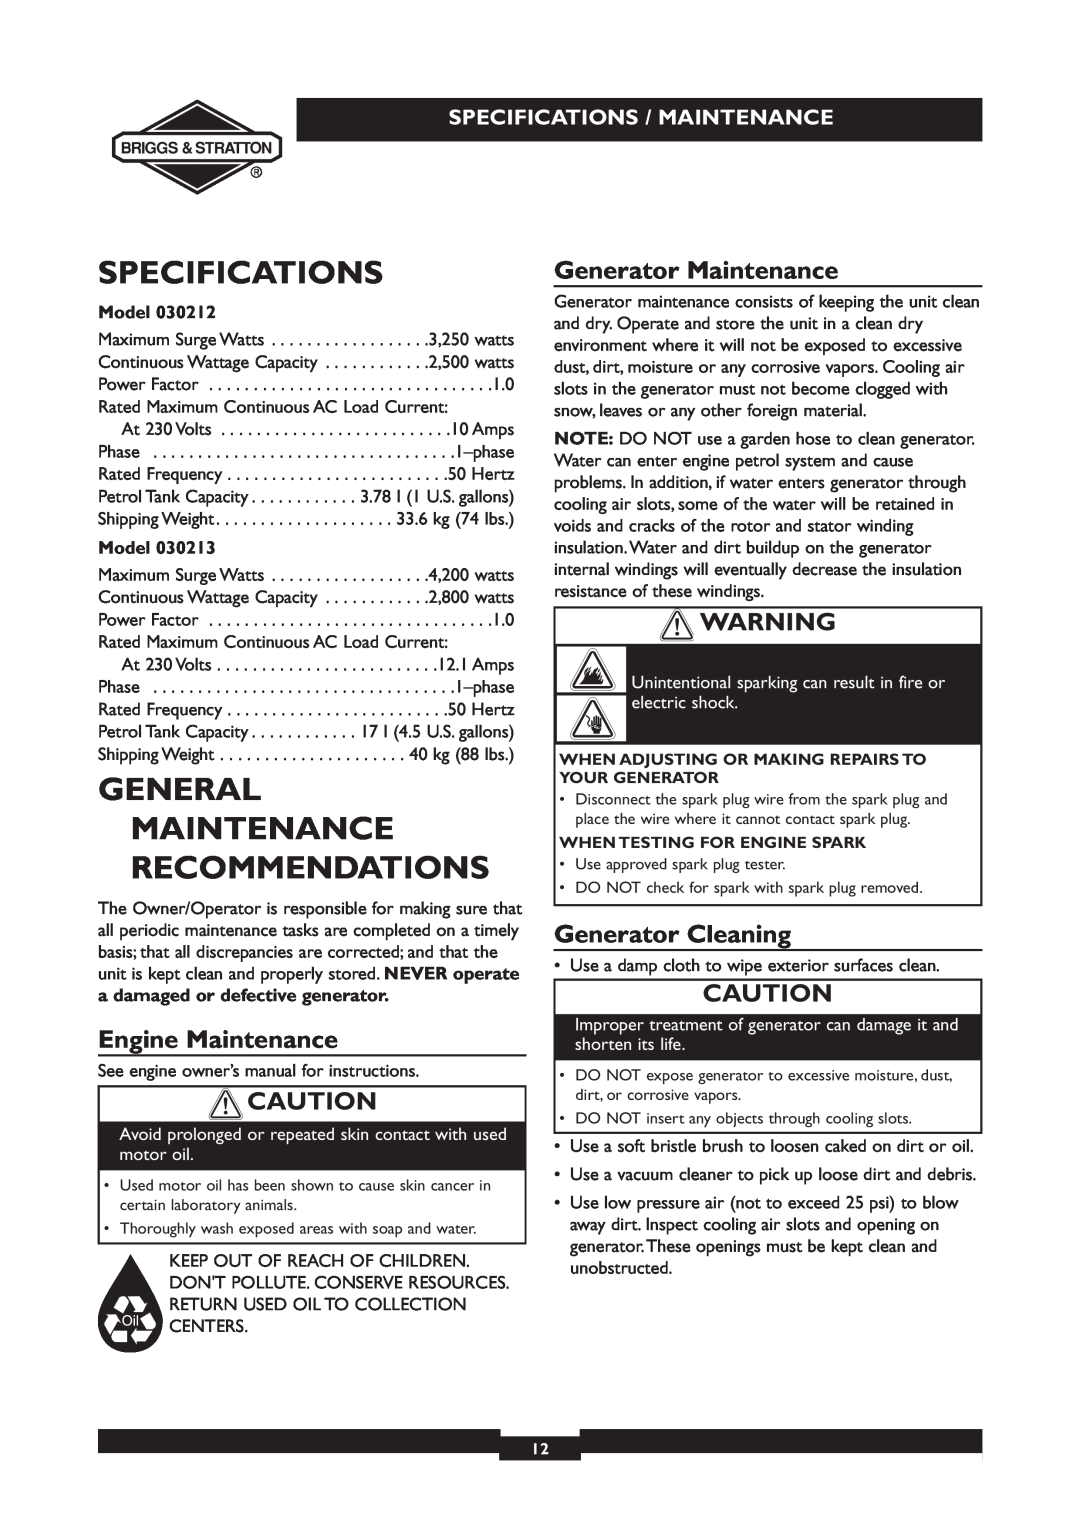 Briggs & Stratton 030213 Specifications, General Maintenance Recommendations, Engine Maintenance, Generator Maintenance 